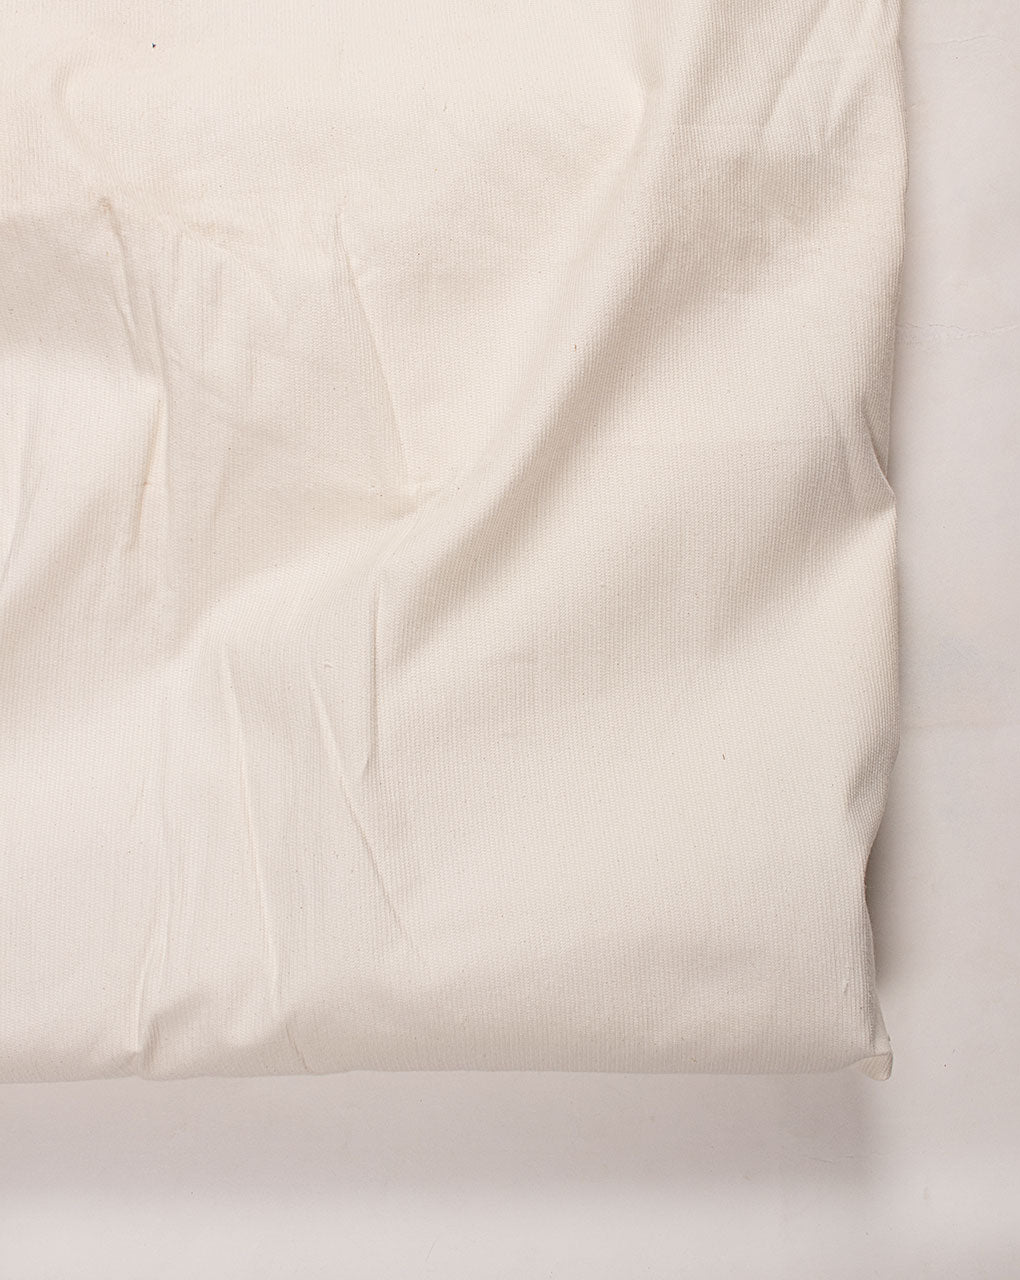 Off-White Plain Cotton Corduroy Fabric ( 14 Wales )